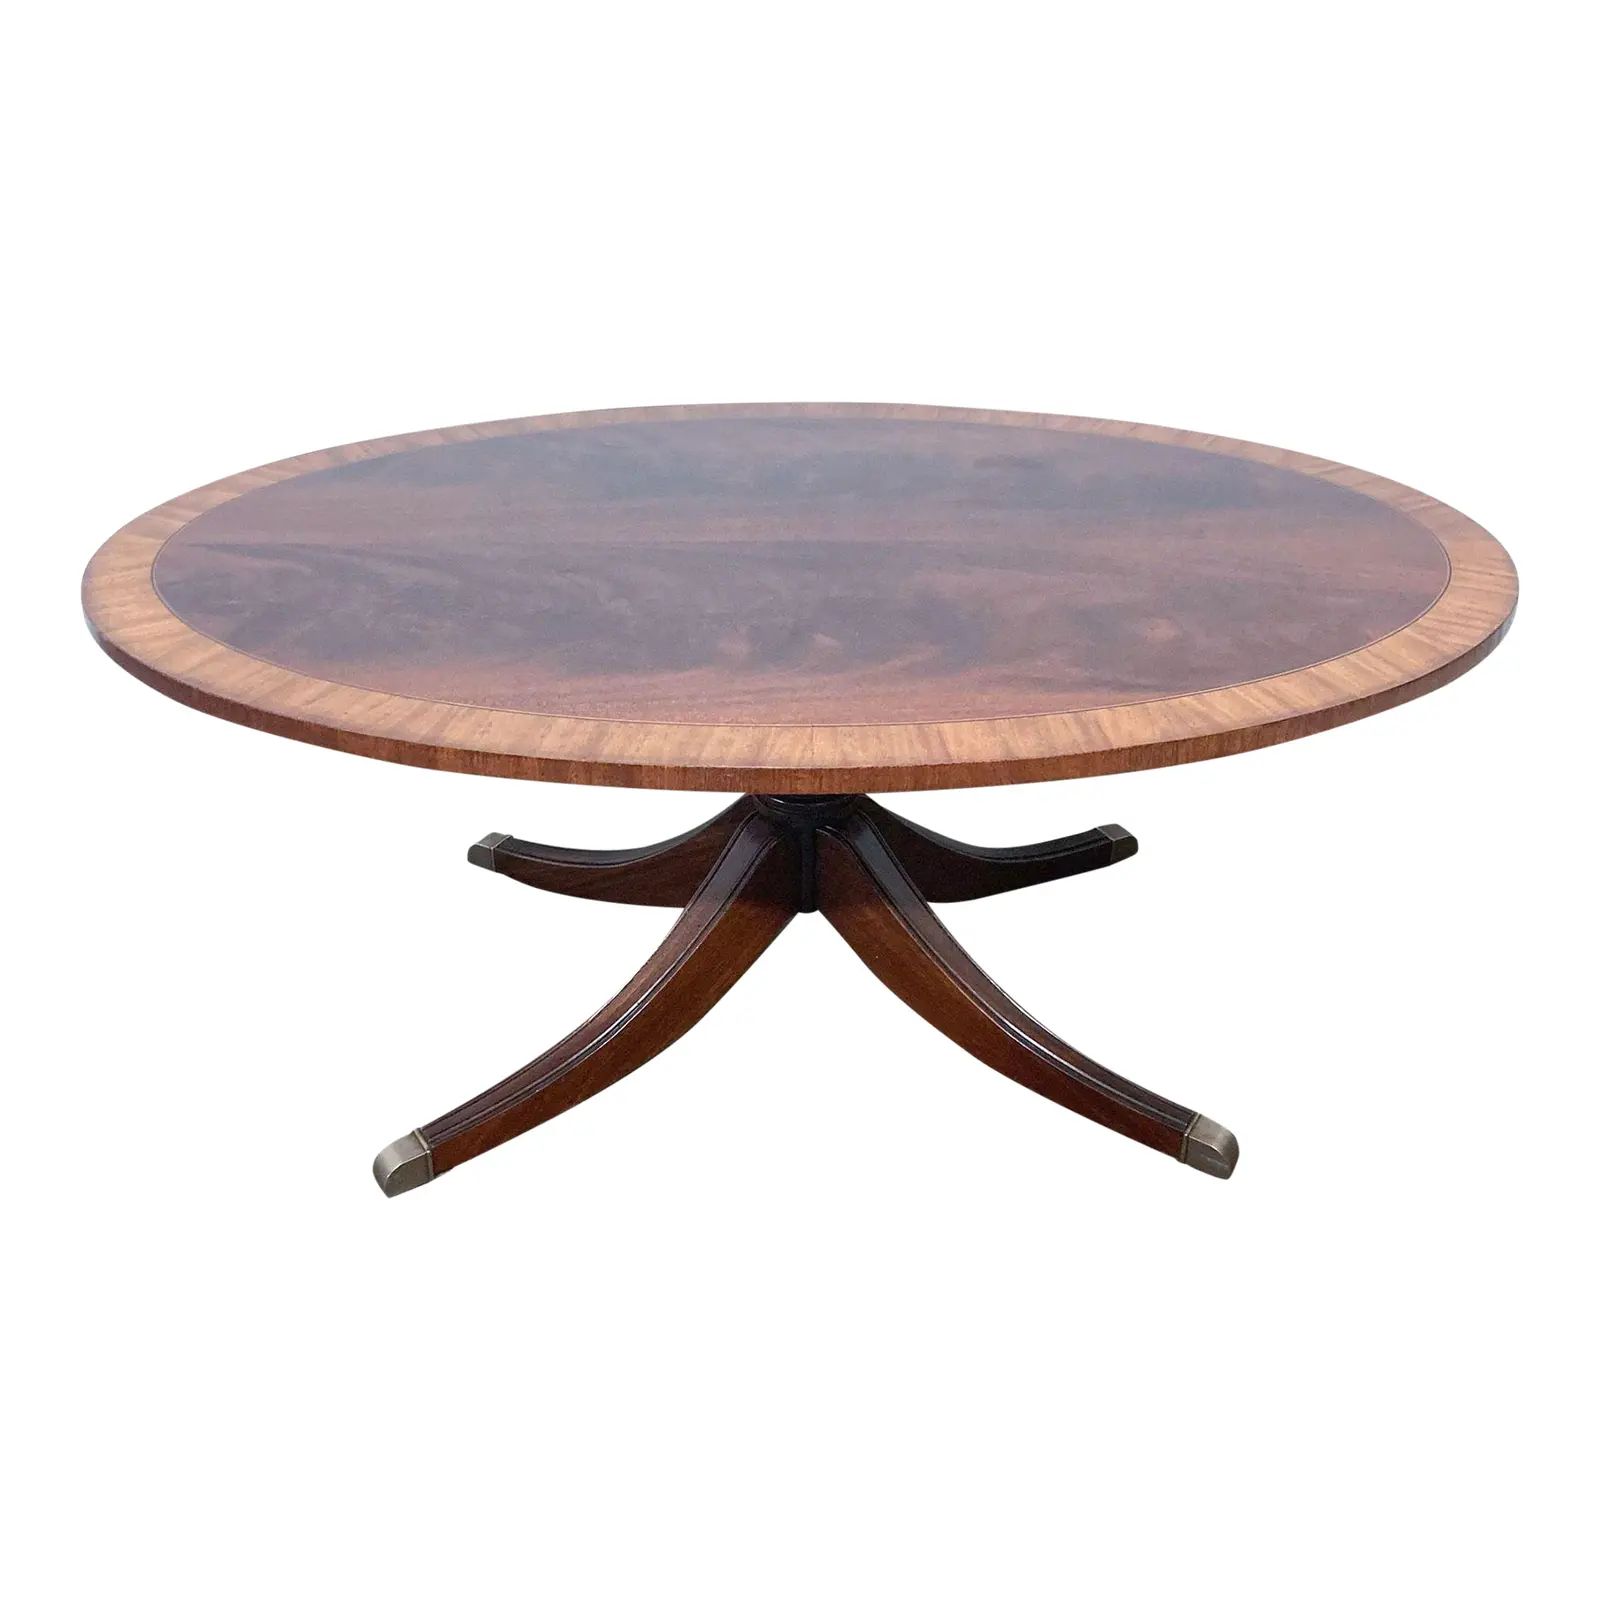 Ethan Allen Thornton Elliptical Oval Coffee Table | Chairish